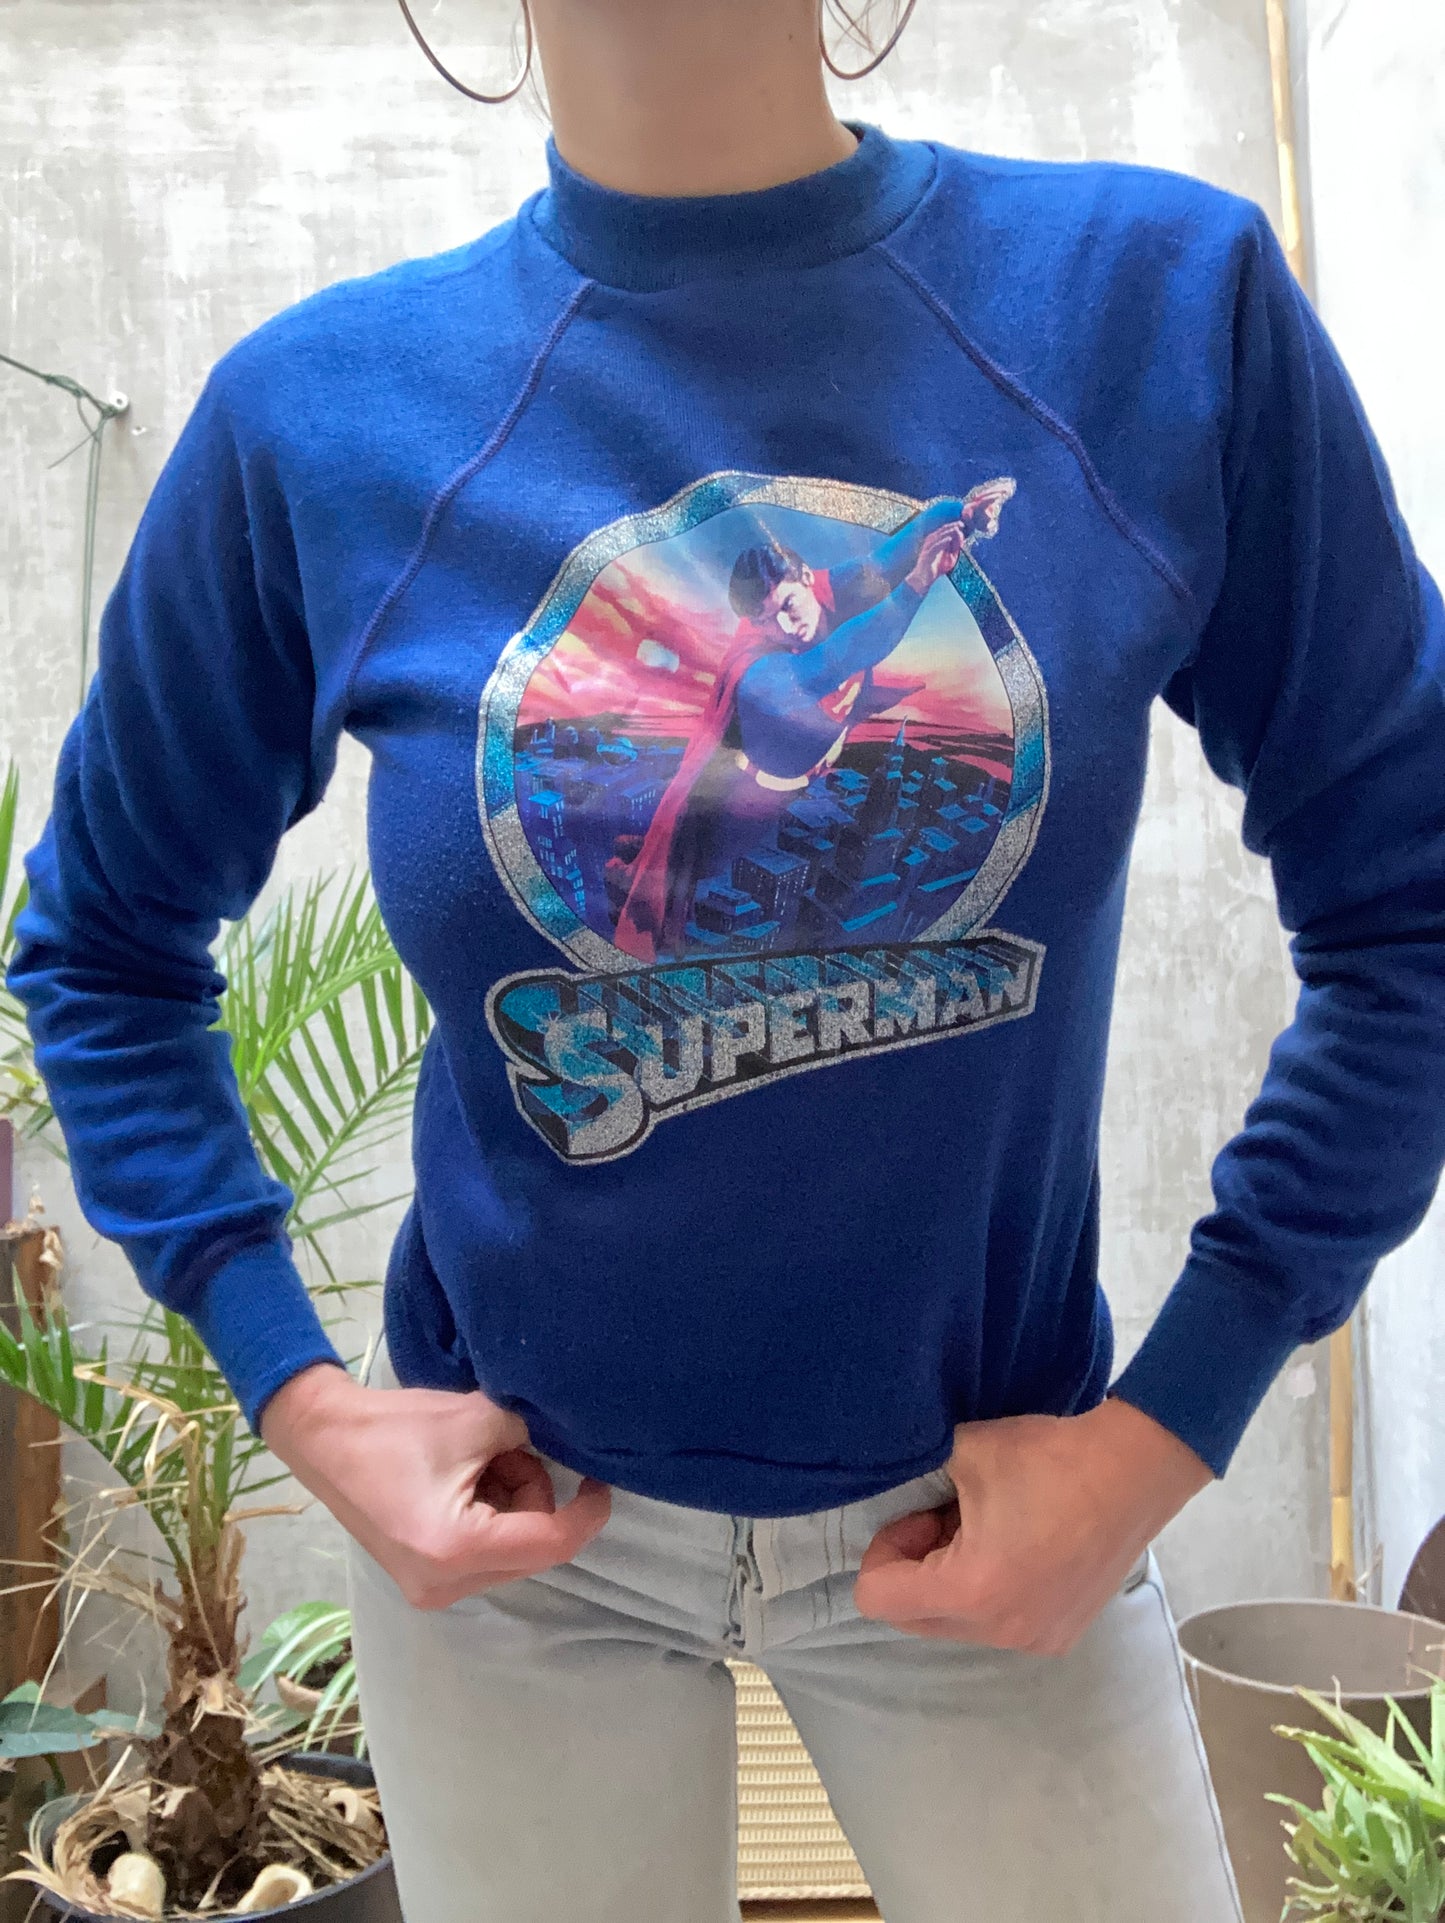 Sweater Superman 1970-80